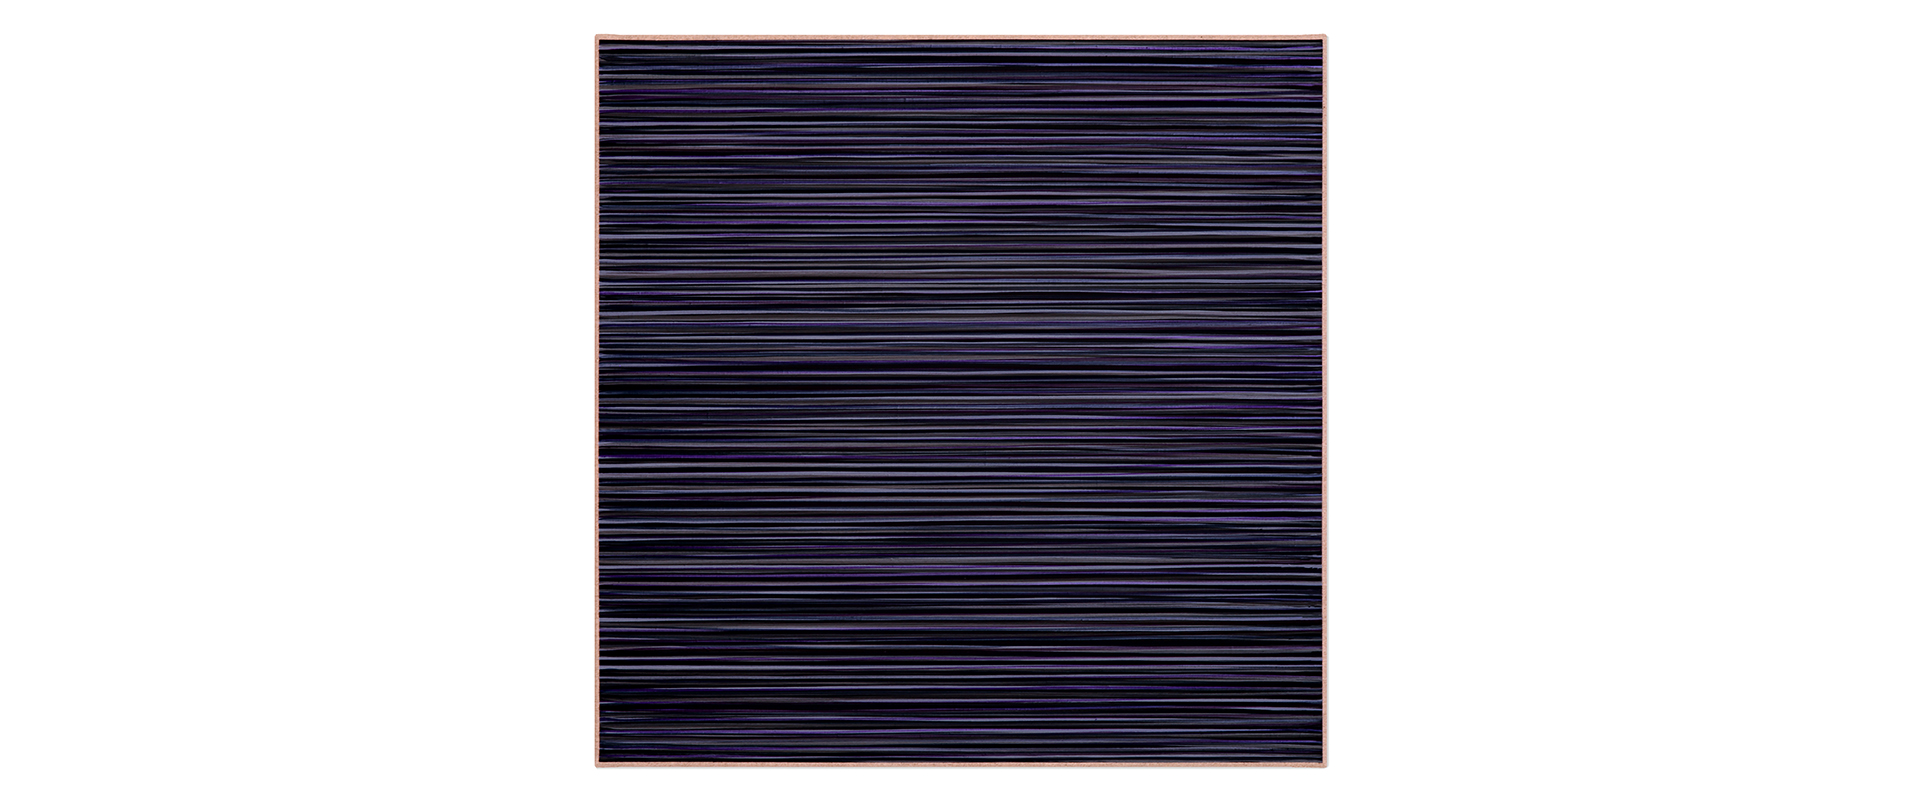 Ohne Titel (2106) – 2021, Acryl auf Leinwand, 50 x 50 cm